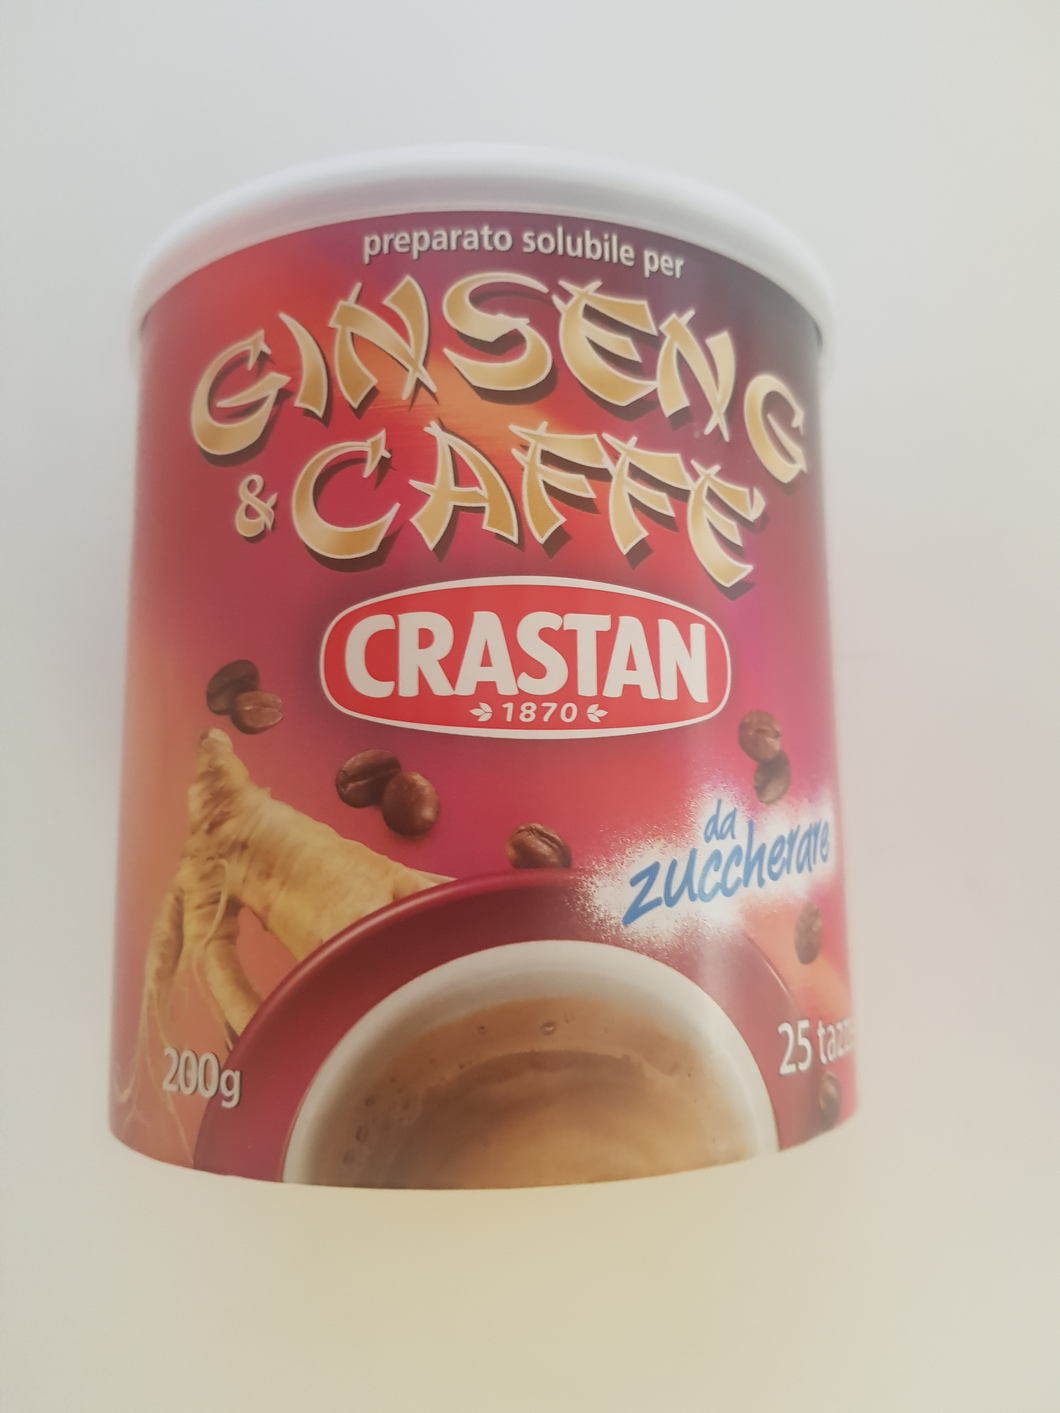 Crastan - Ginseng & Caffe (Ginger & Coffee)